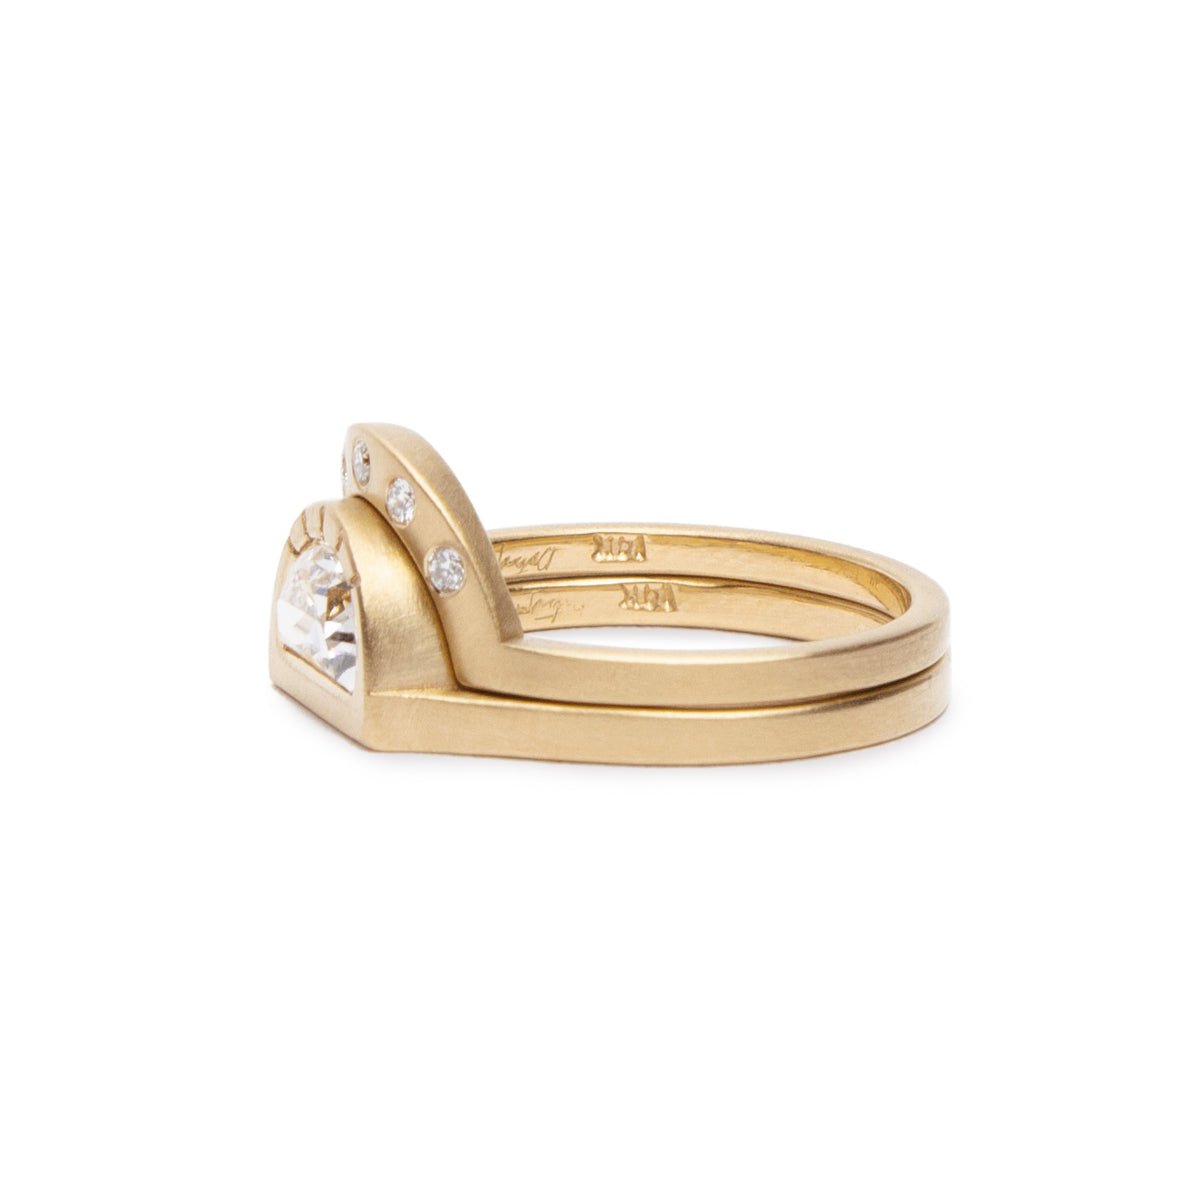 White Diamond Cor Ring stacked with the White Diamond Omnia Ring (Large). Omnia ring sold separately.